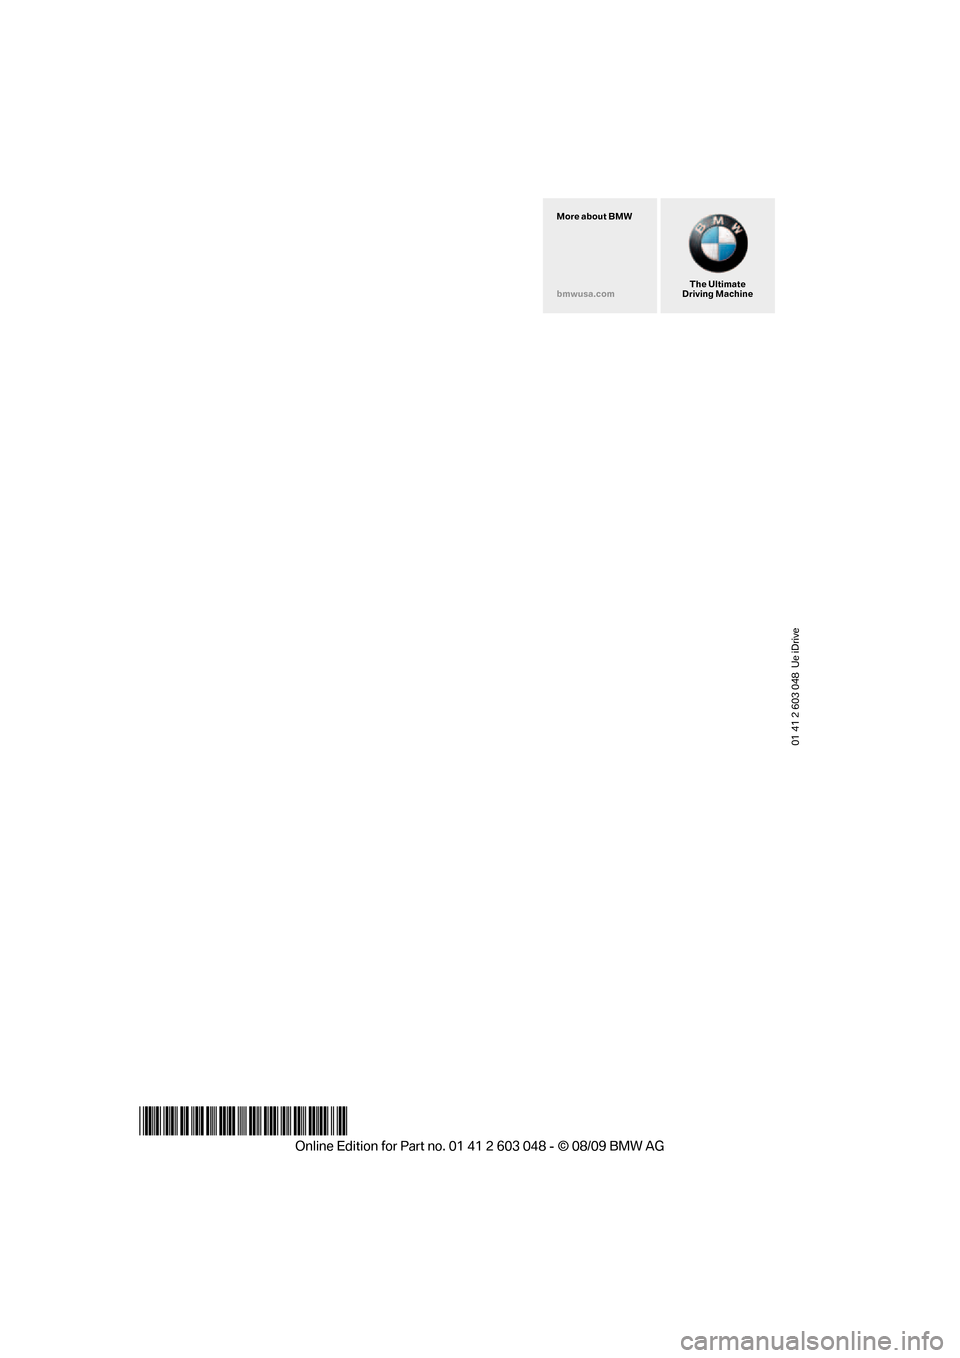 BMW 328I XDRIVE SEDAN 2010 E90 Owners Manual 01 41 2 603 048  Ue iDrive
*BL260304800P*
The Ultimate
Driving Machine More about BMW
bmwusa.com 